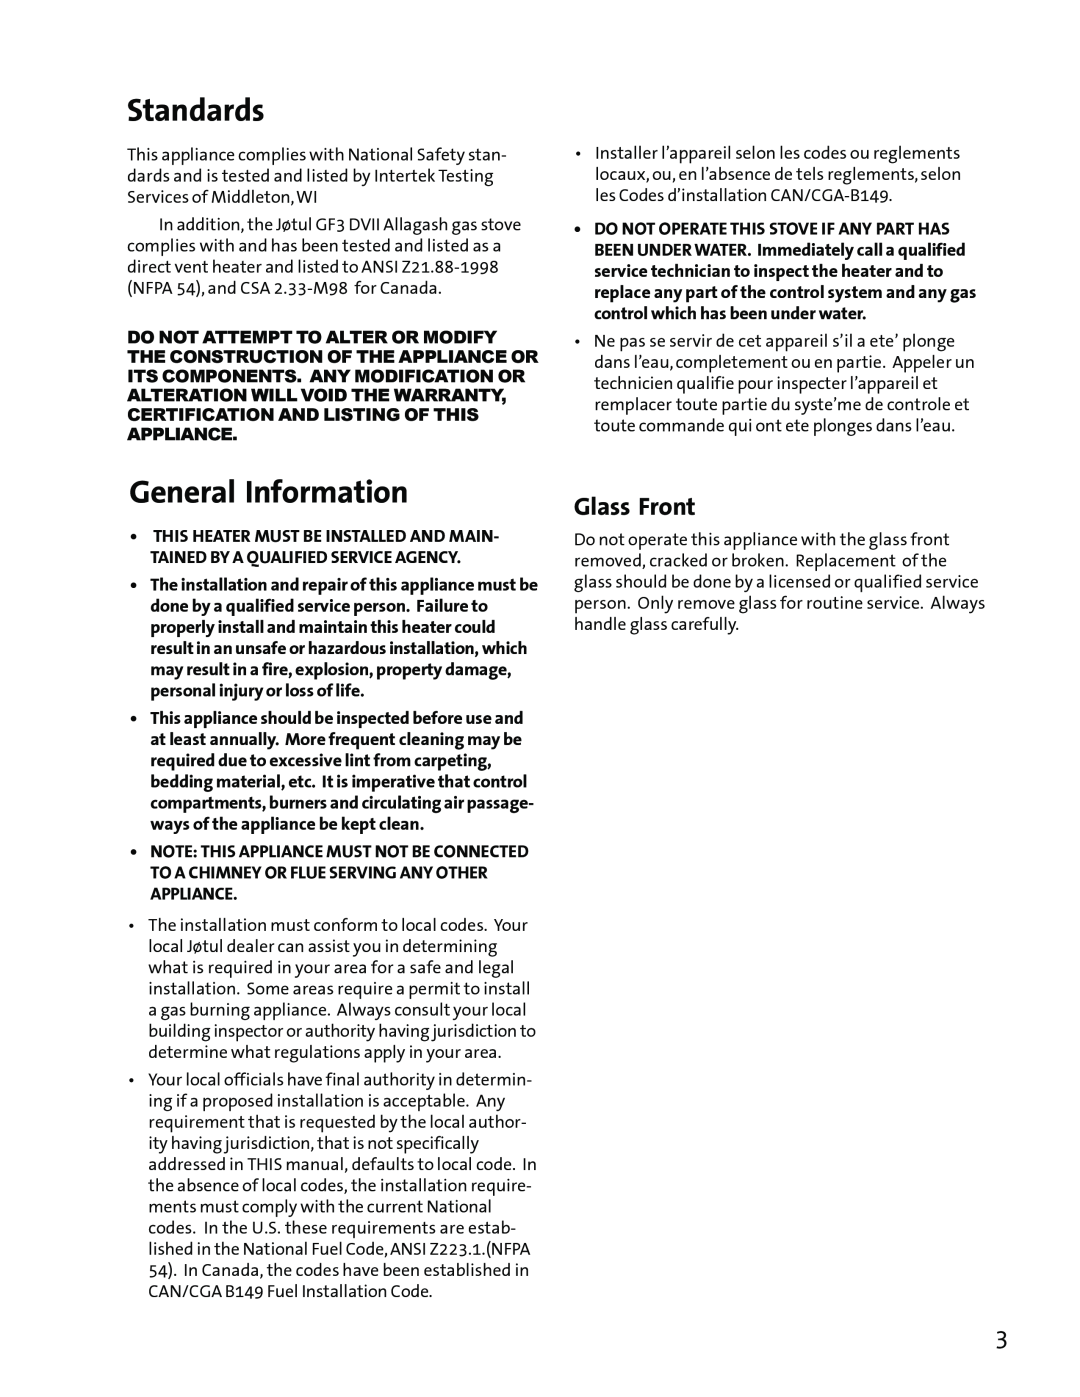 Jotul GF3 DVII manual Standards, General Information, Glass Front 